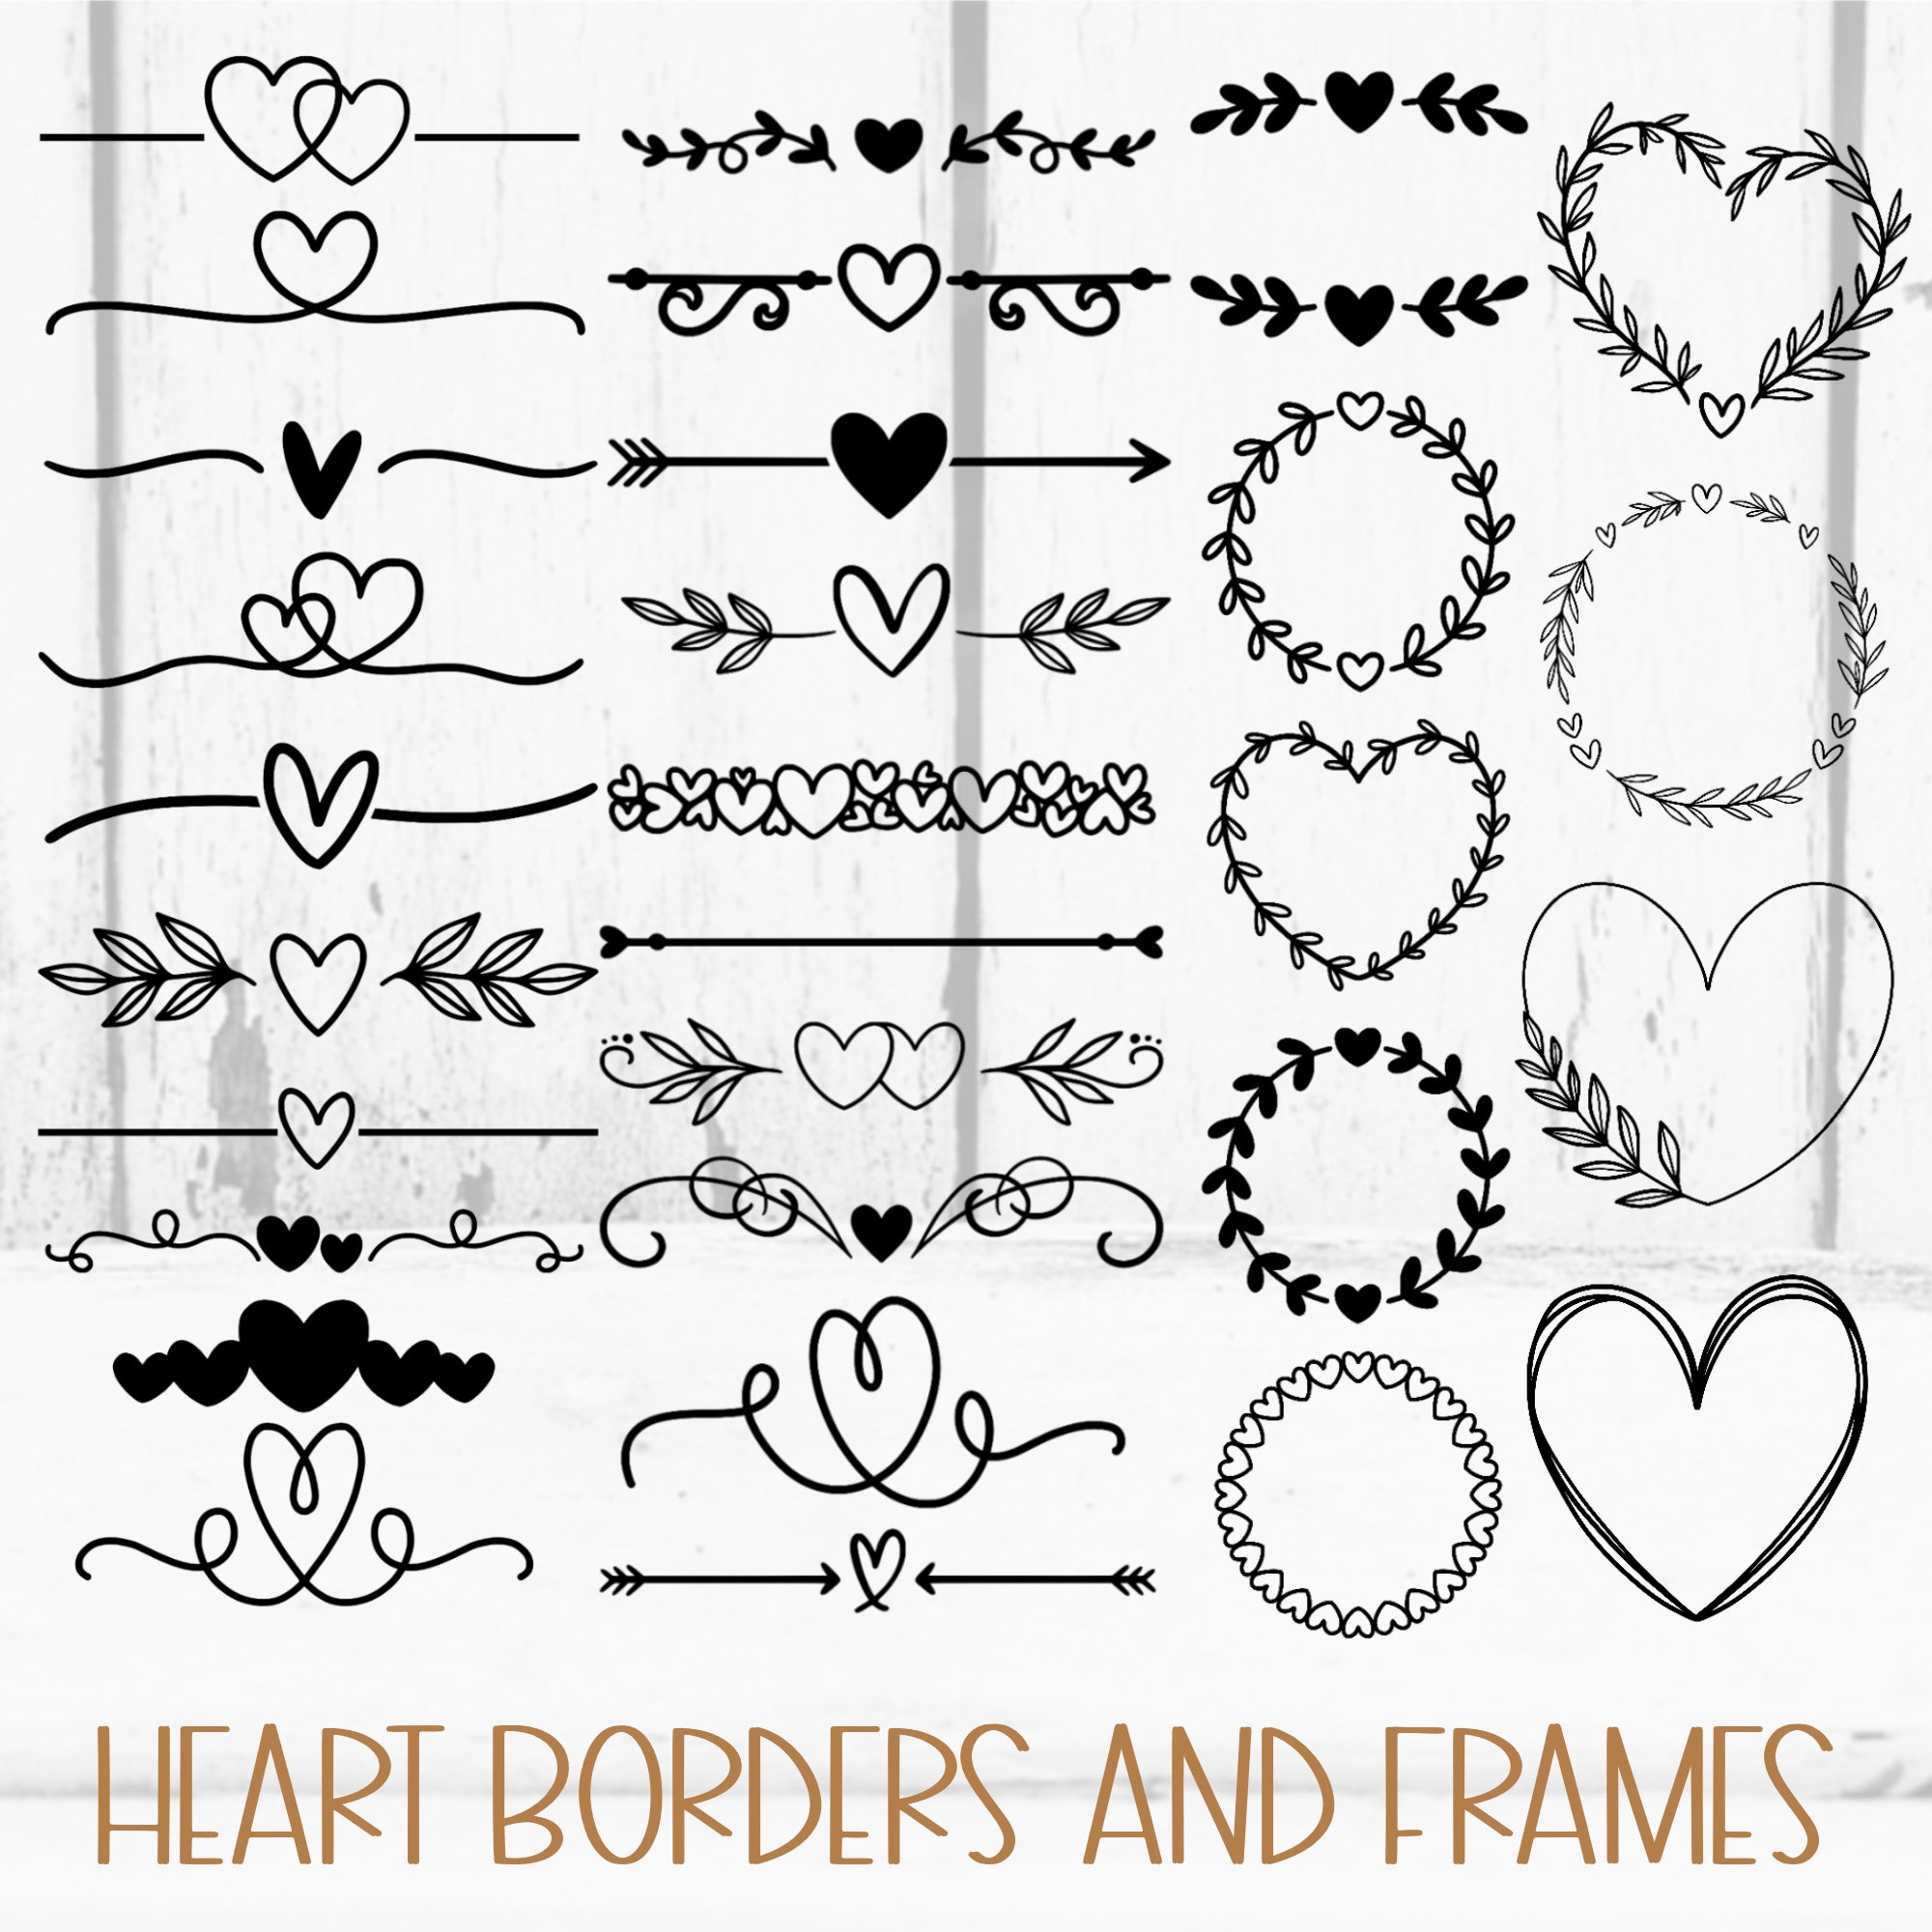 Heart Monogram Stickers Graphic by stacysdigitaldesigns · Creative Fabrica